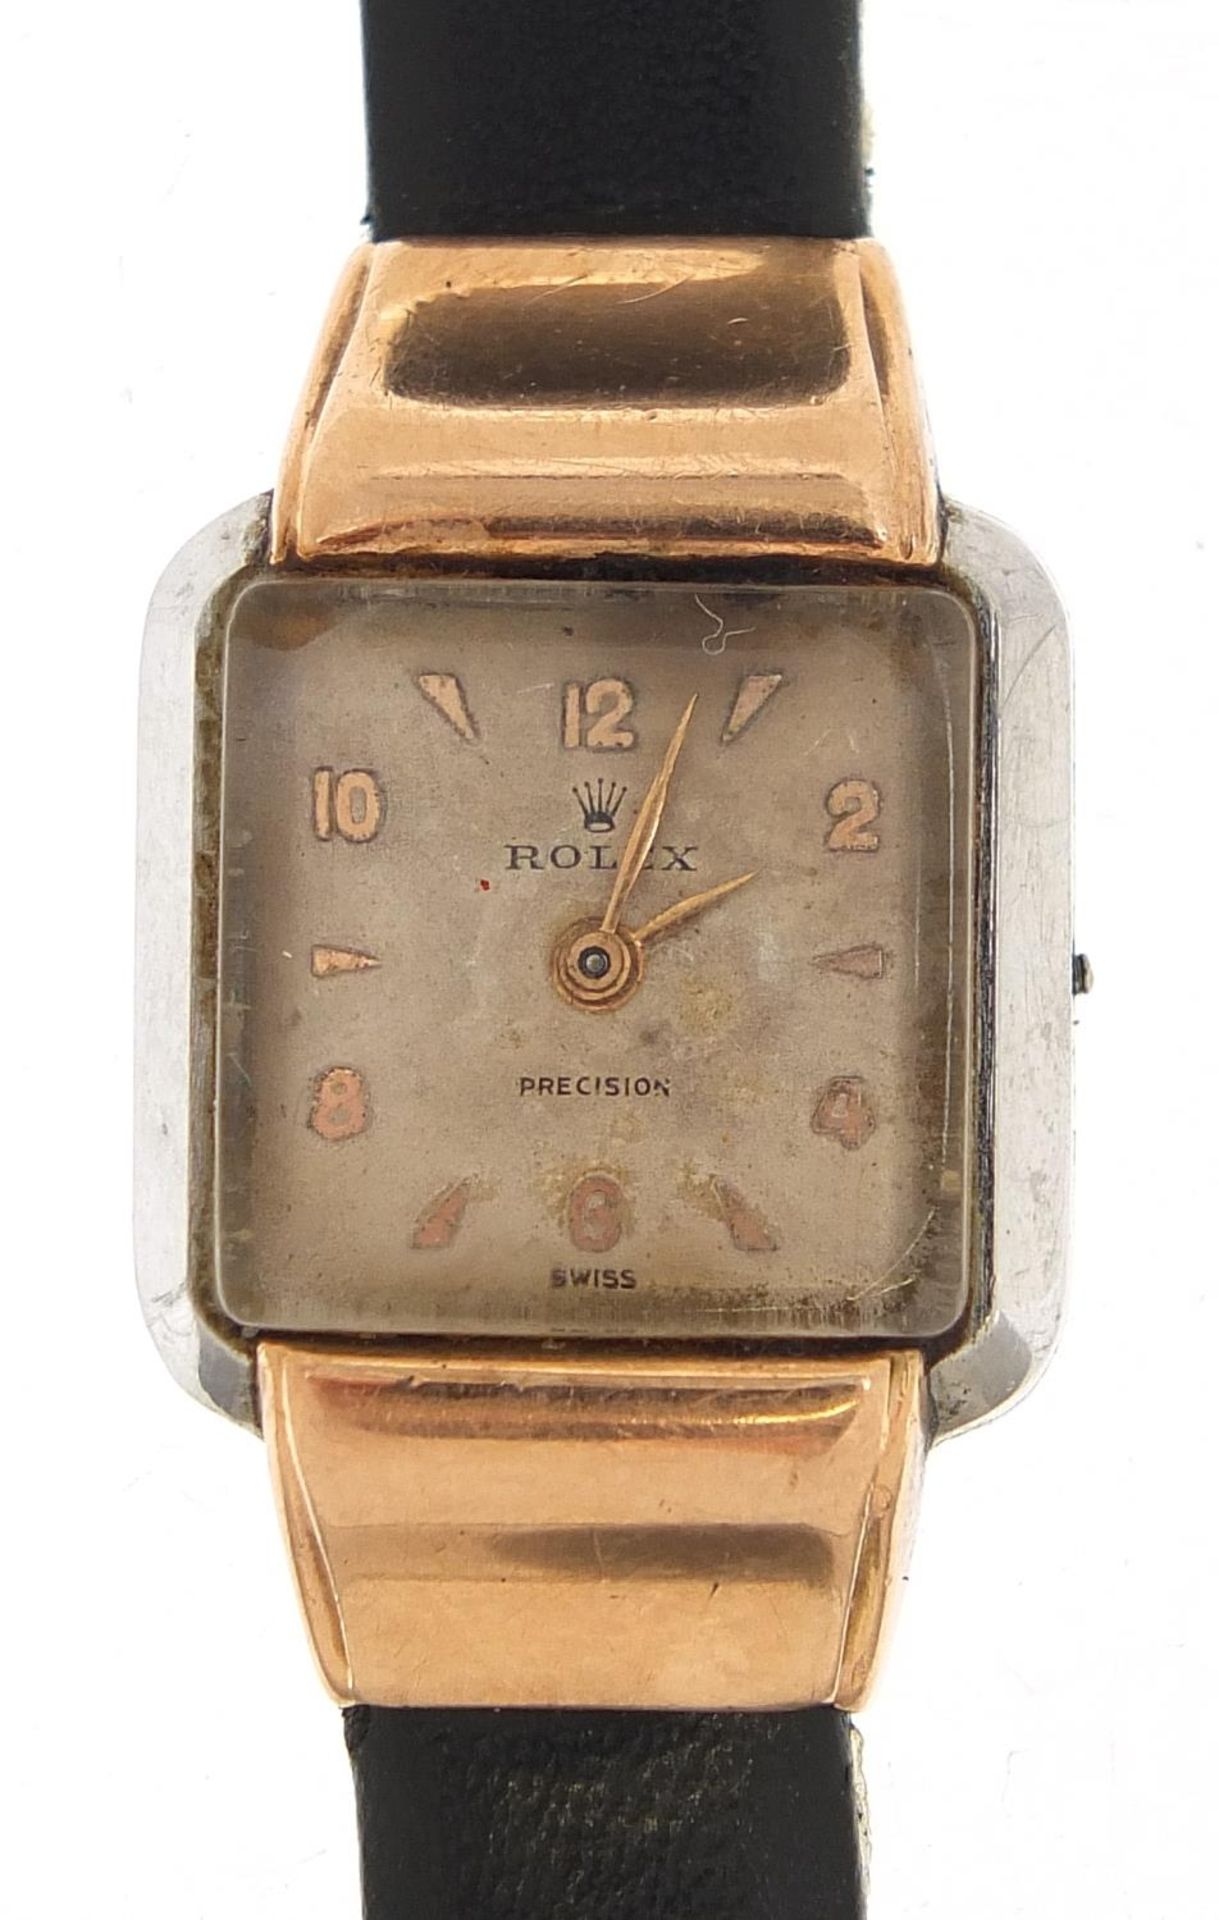 Rolex, vintage ladies Rolex Precision wristwatch the case numbered 4375 485371, 18mm wide